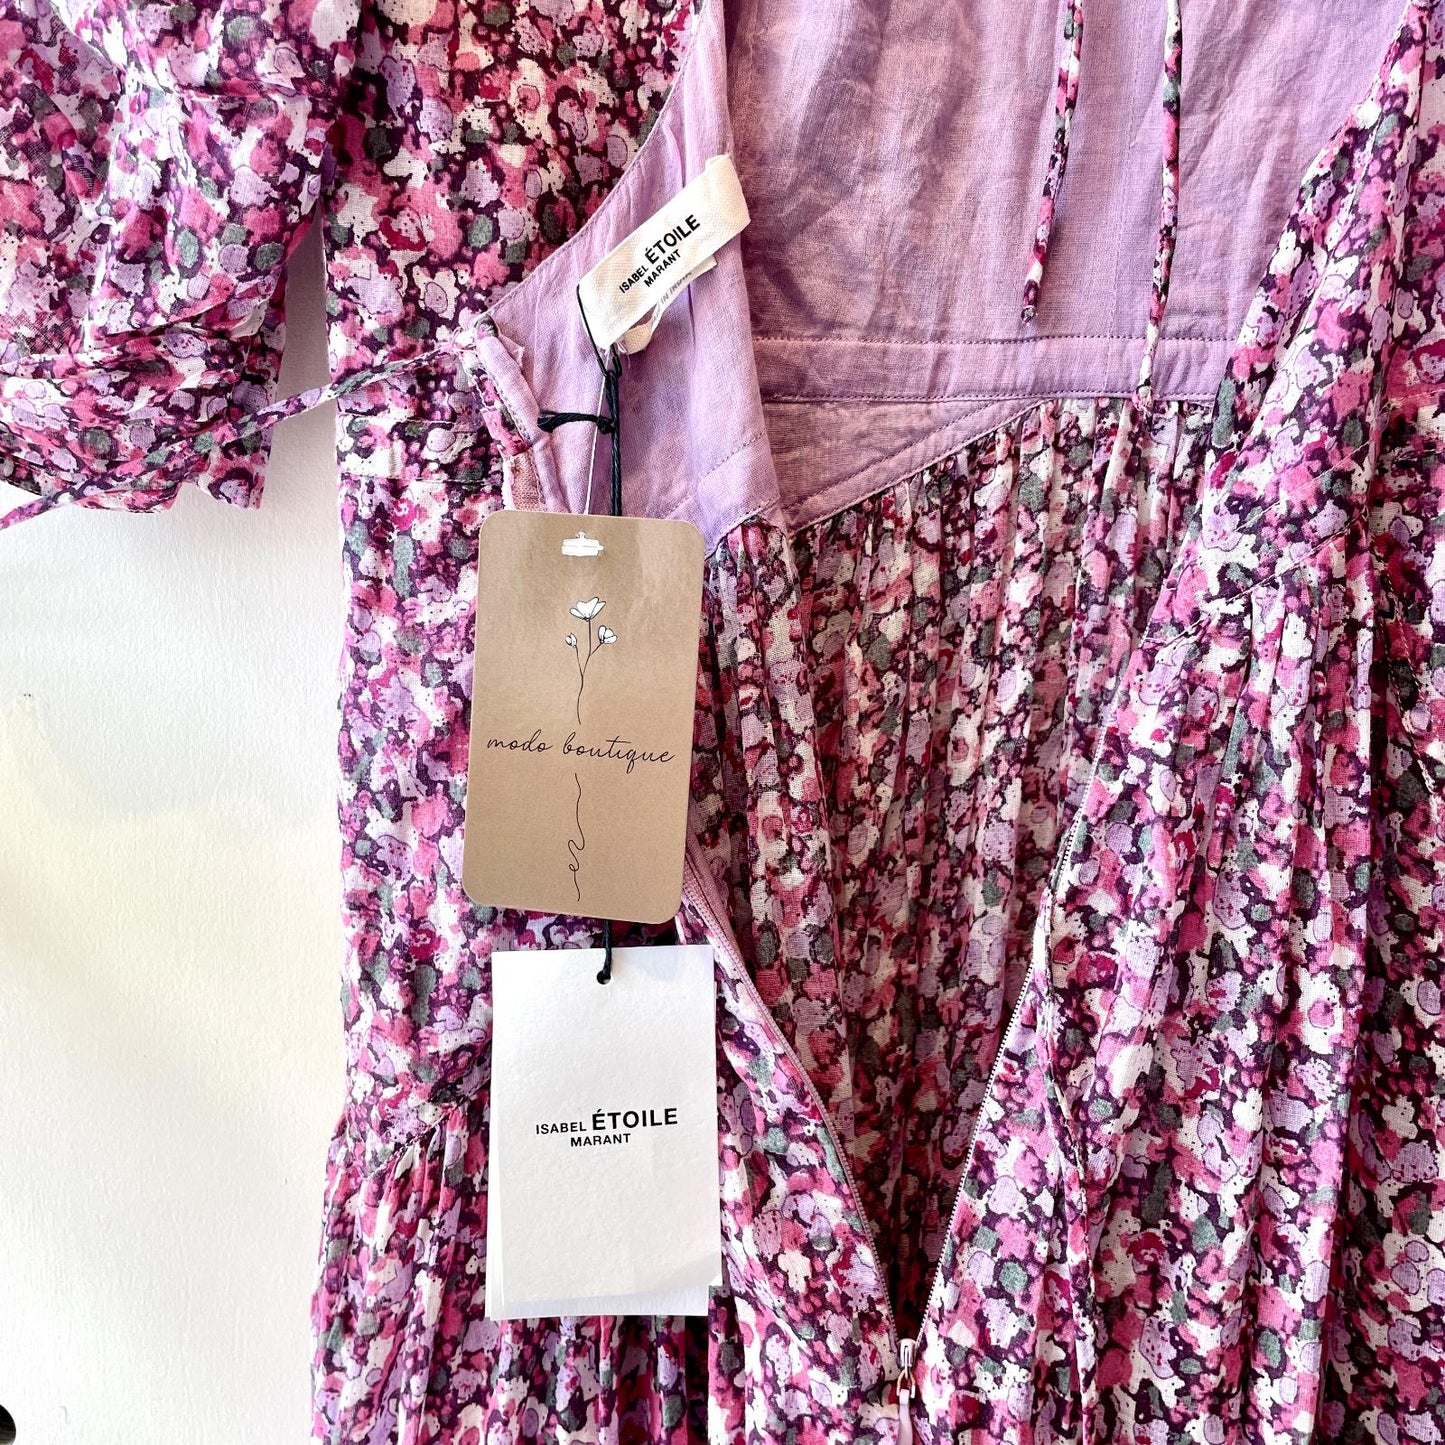 42 / 2 US - Isabel Marant $690 Purple Floral Open Back Sichelle Dress NEW 0716MD